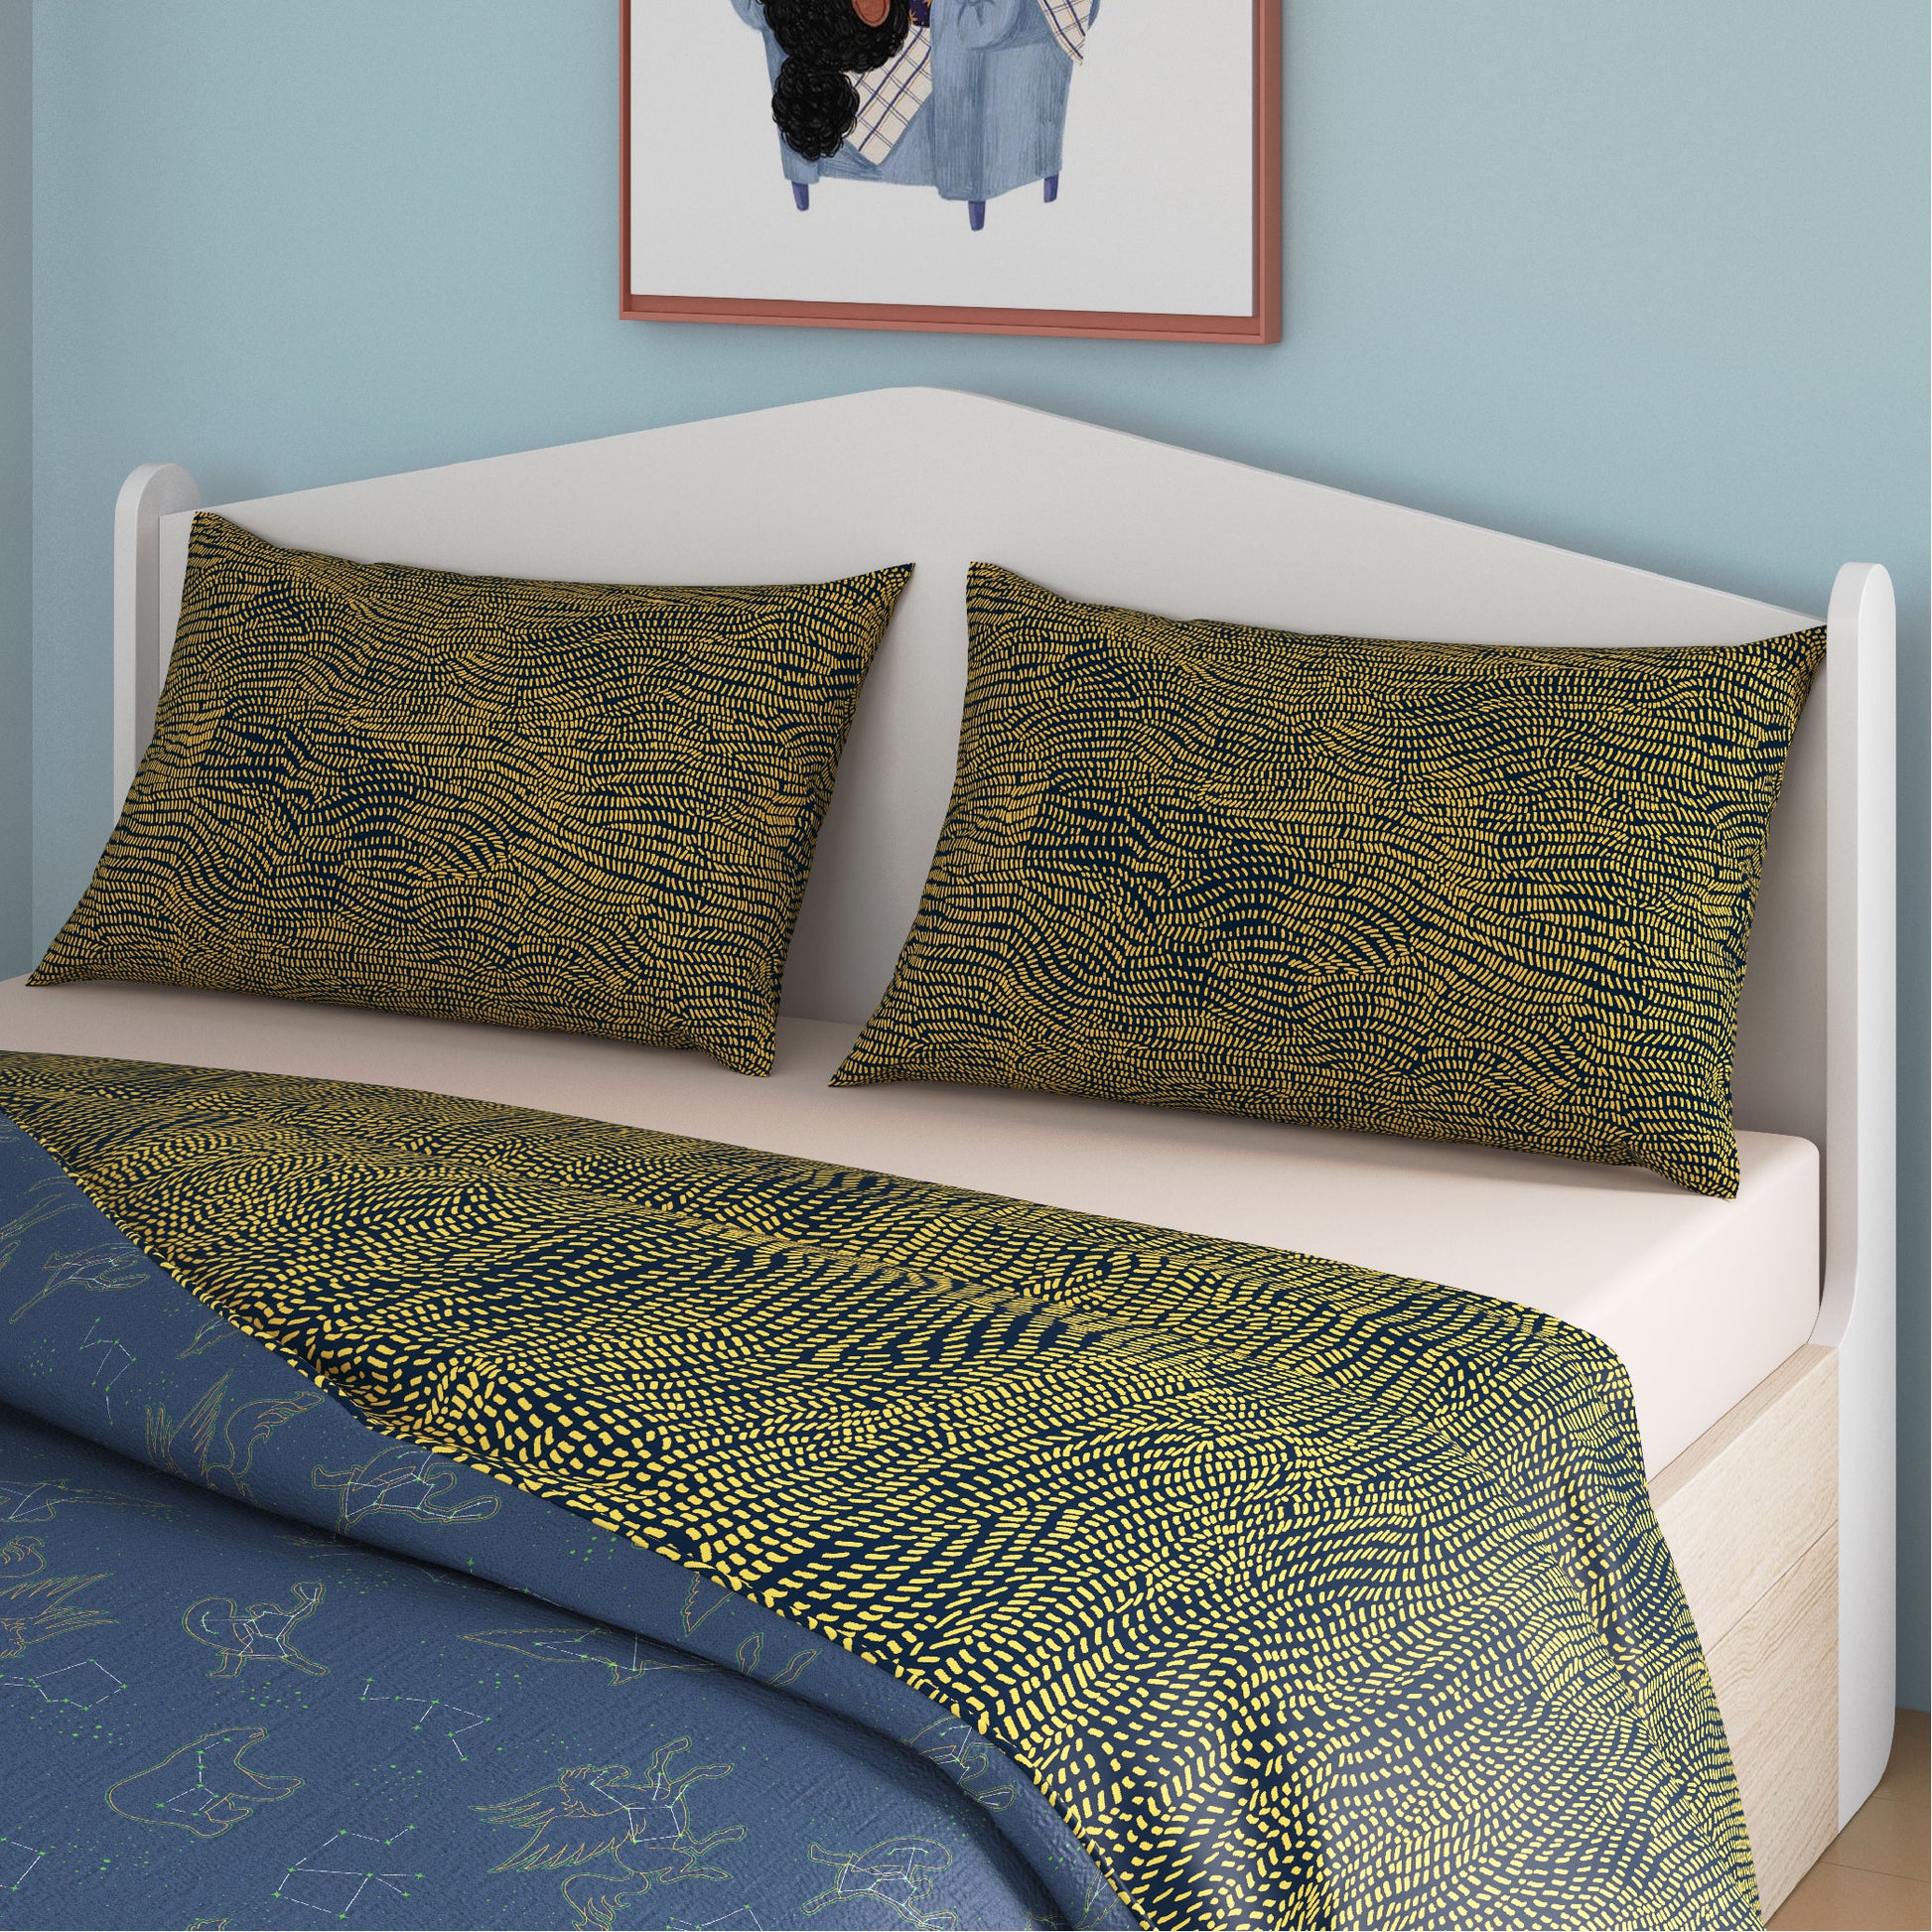 media_gallary Constellation Glow Reversible Winter Comforter Queen Bed Size 3